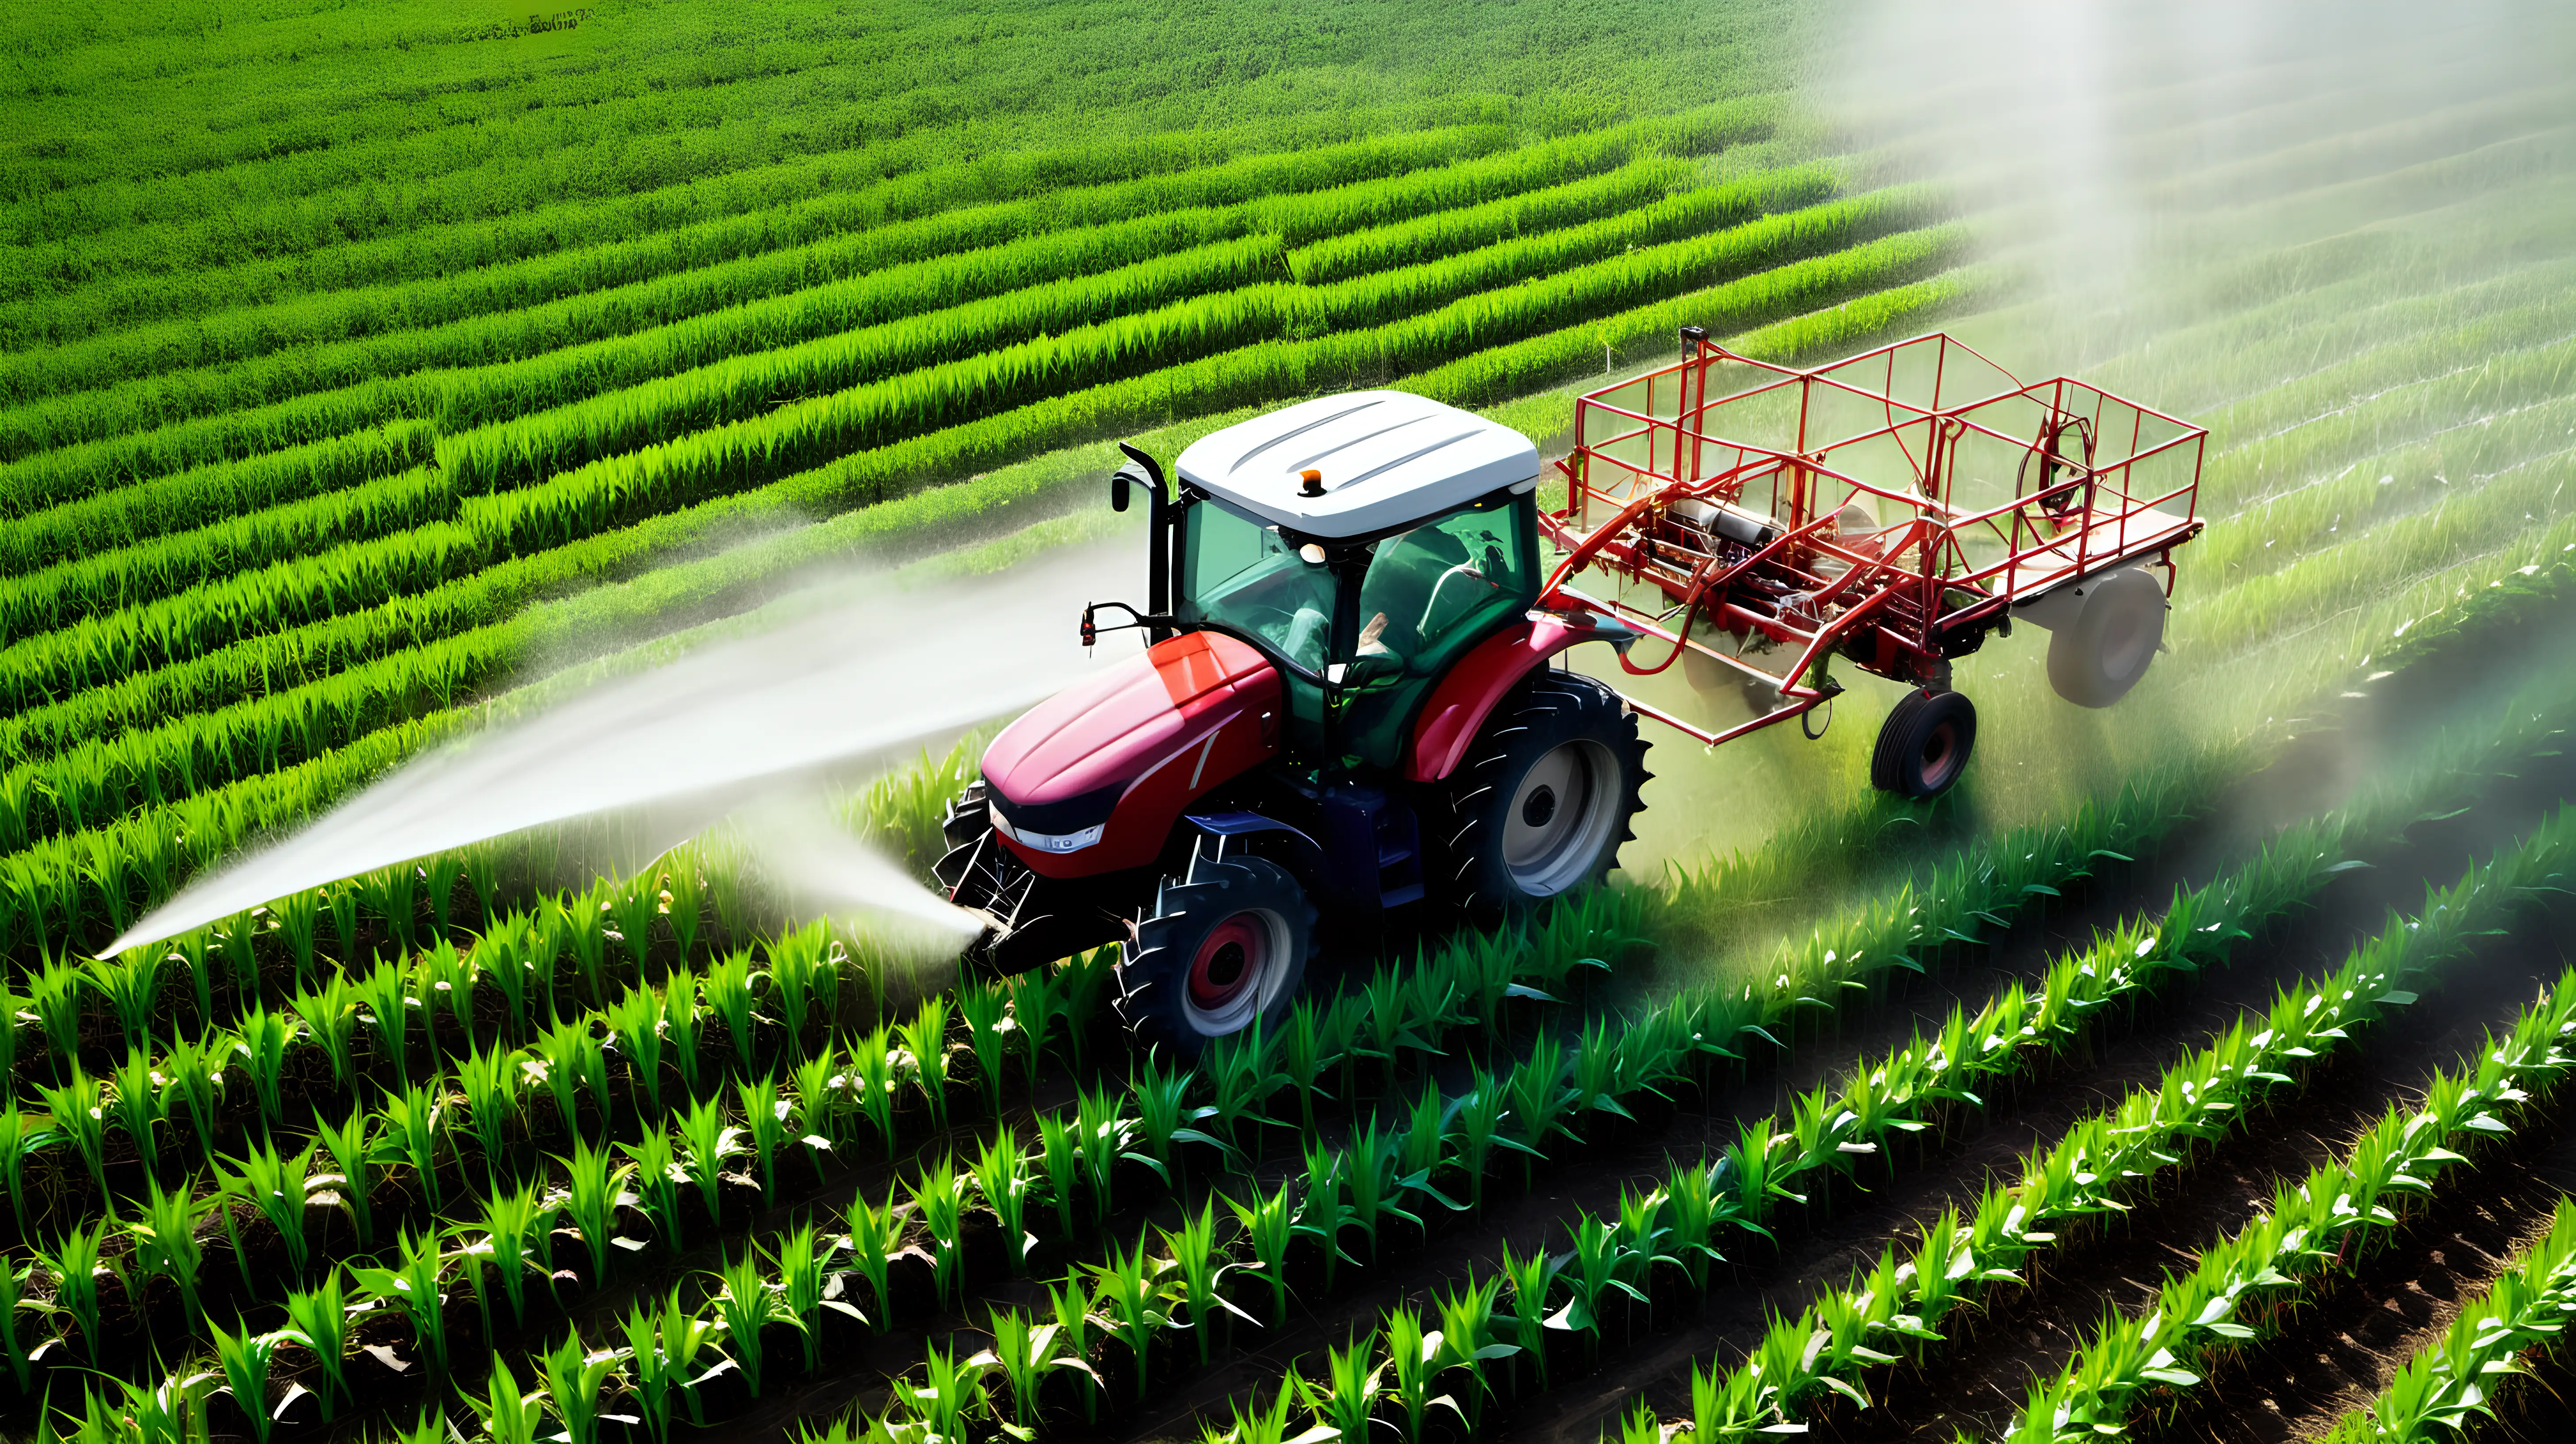 Tractor Spraying Pesticides on cornfield Plantation, photo shoot